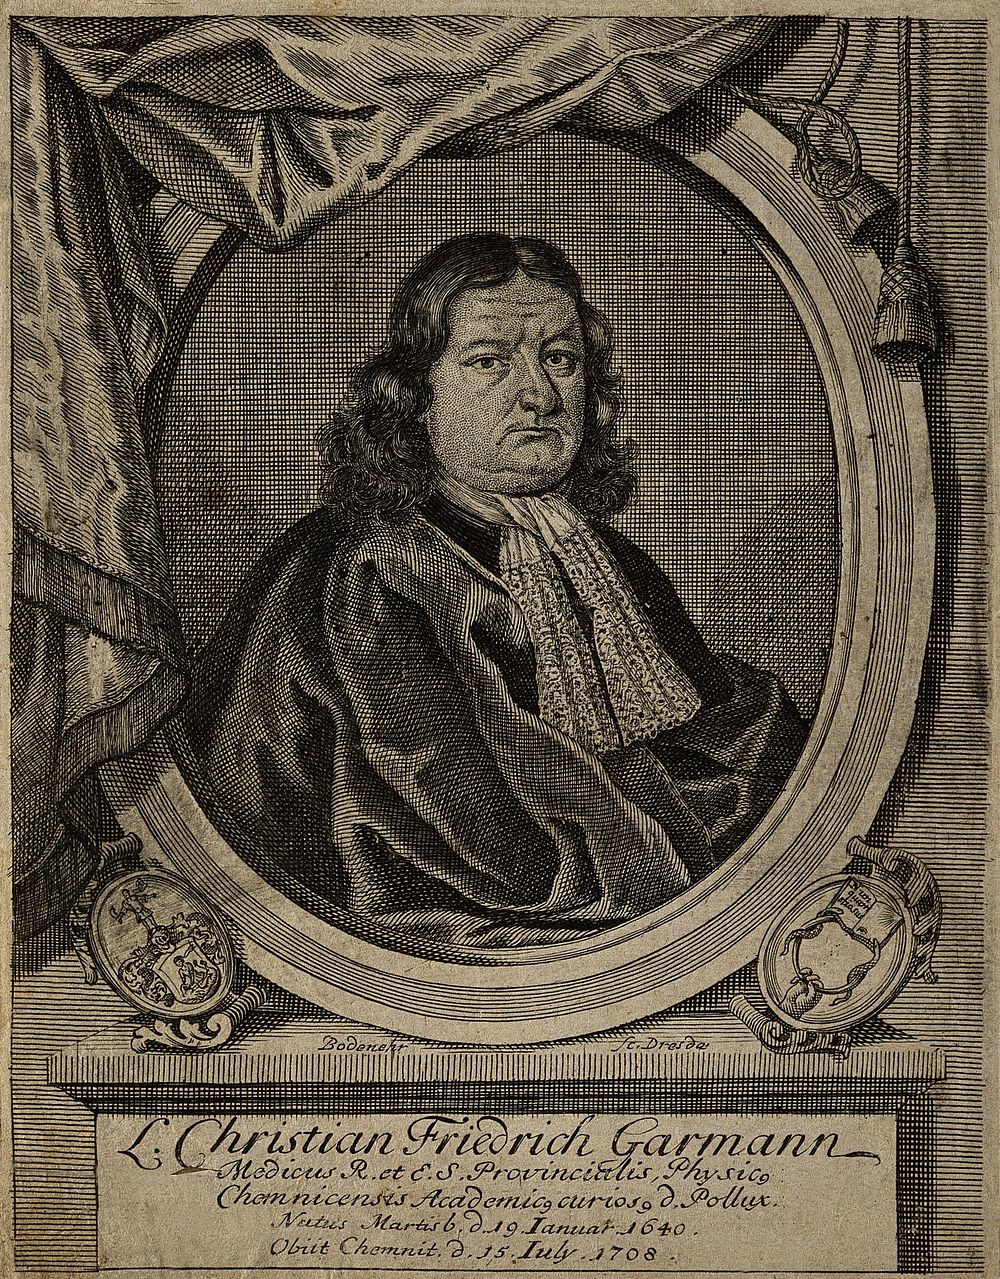 L. Christian Friedrich Garmann. Line engraving by Bodenehr.